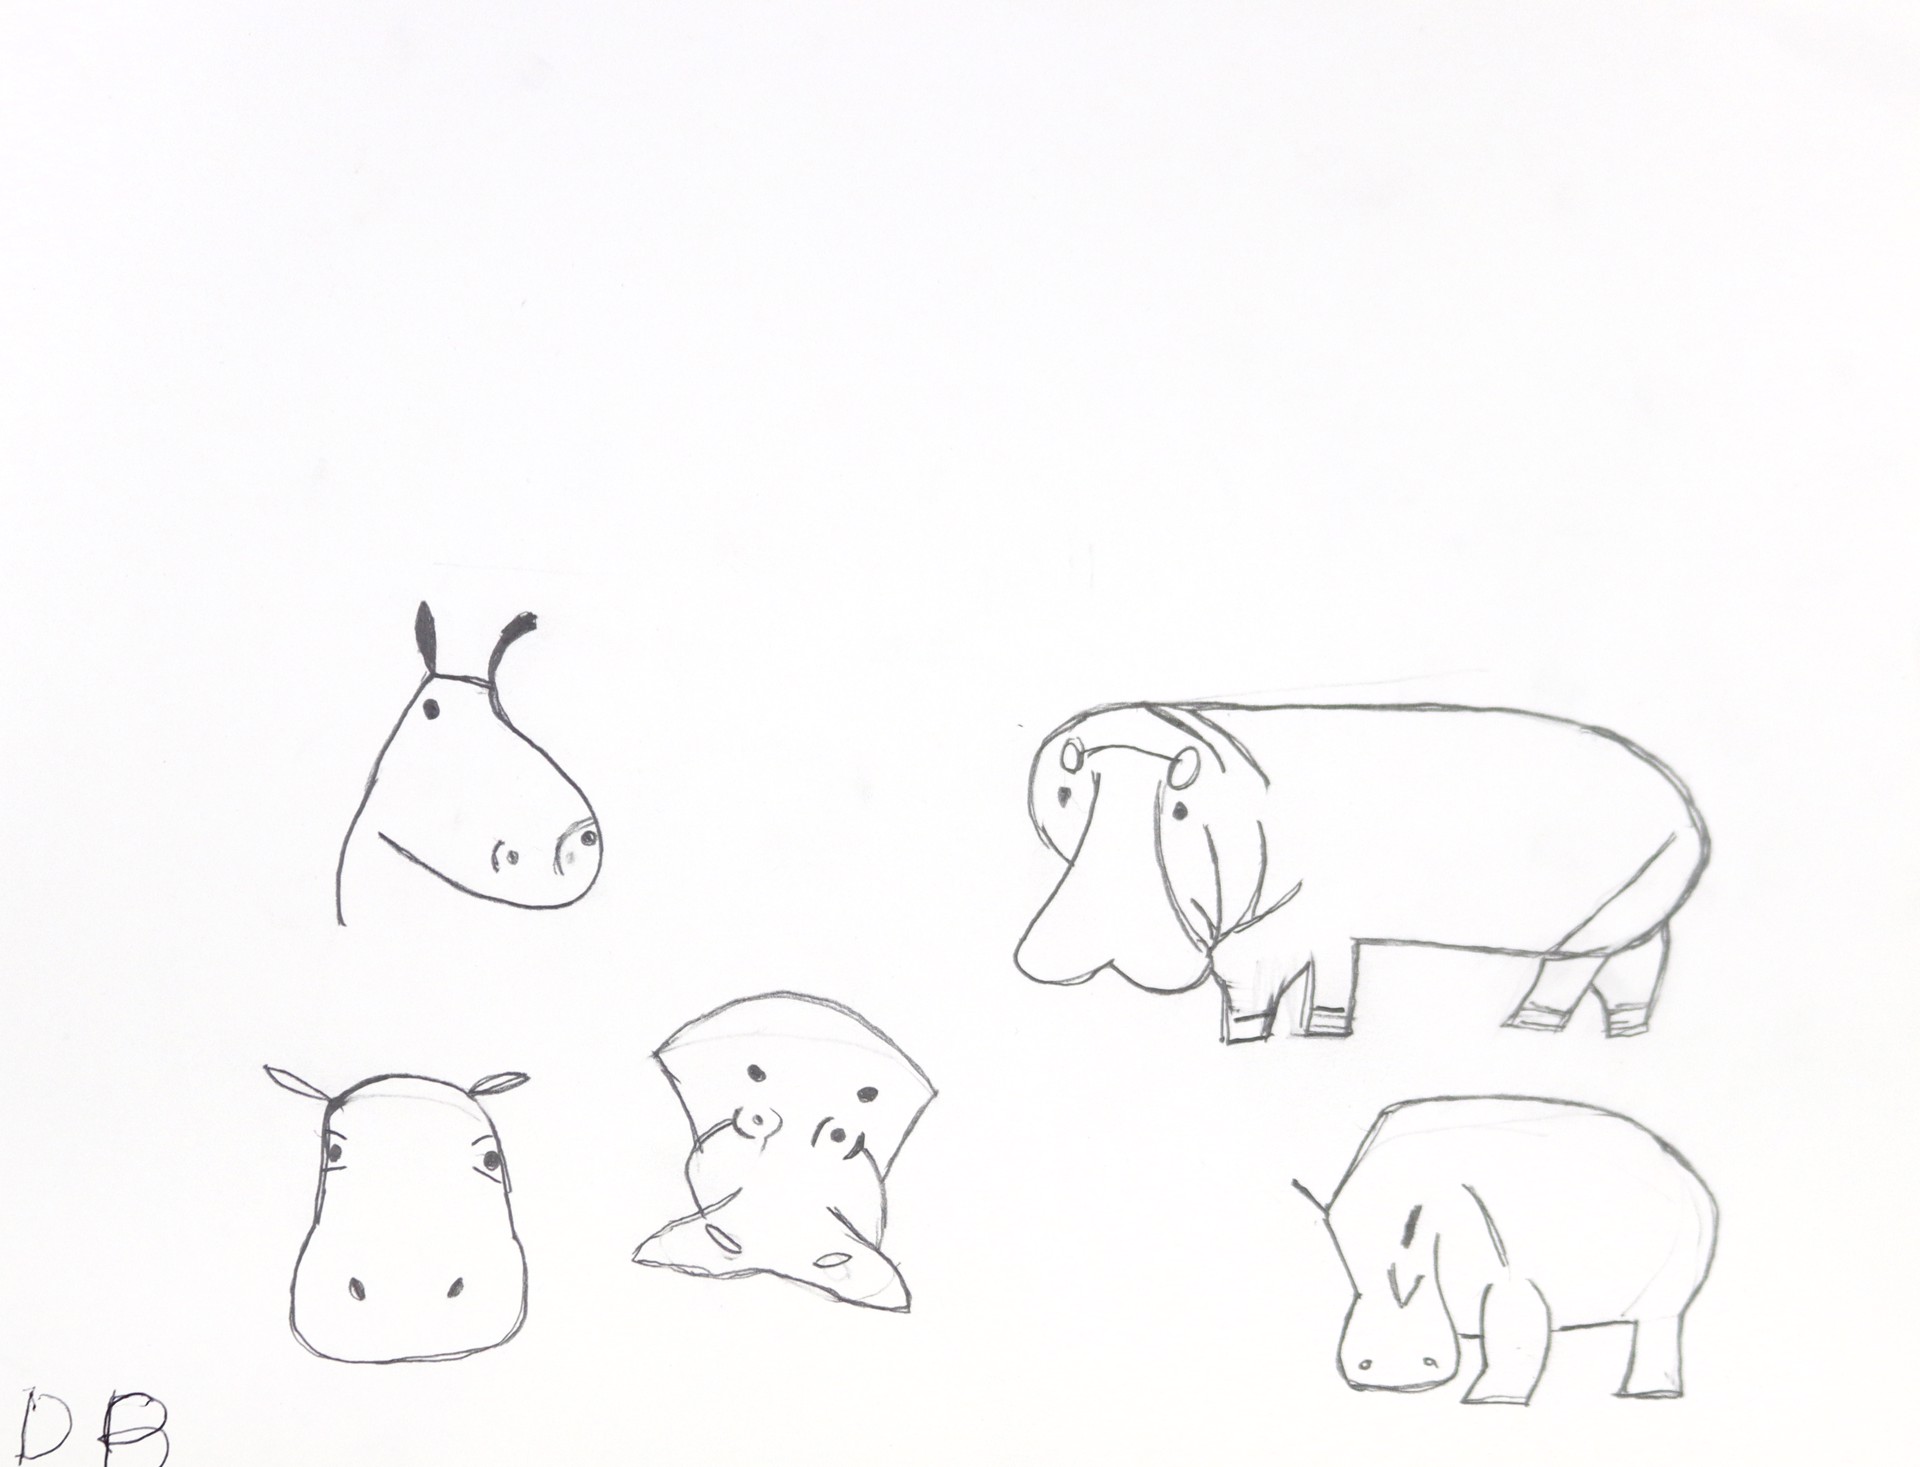 Hippos by Duane Blacksheare-Staton